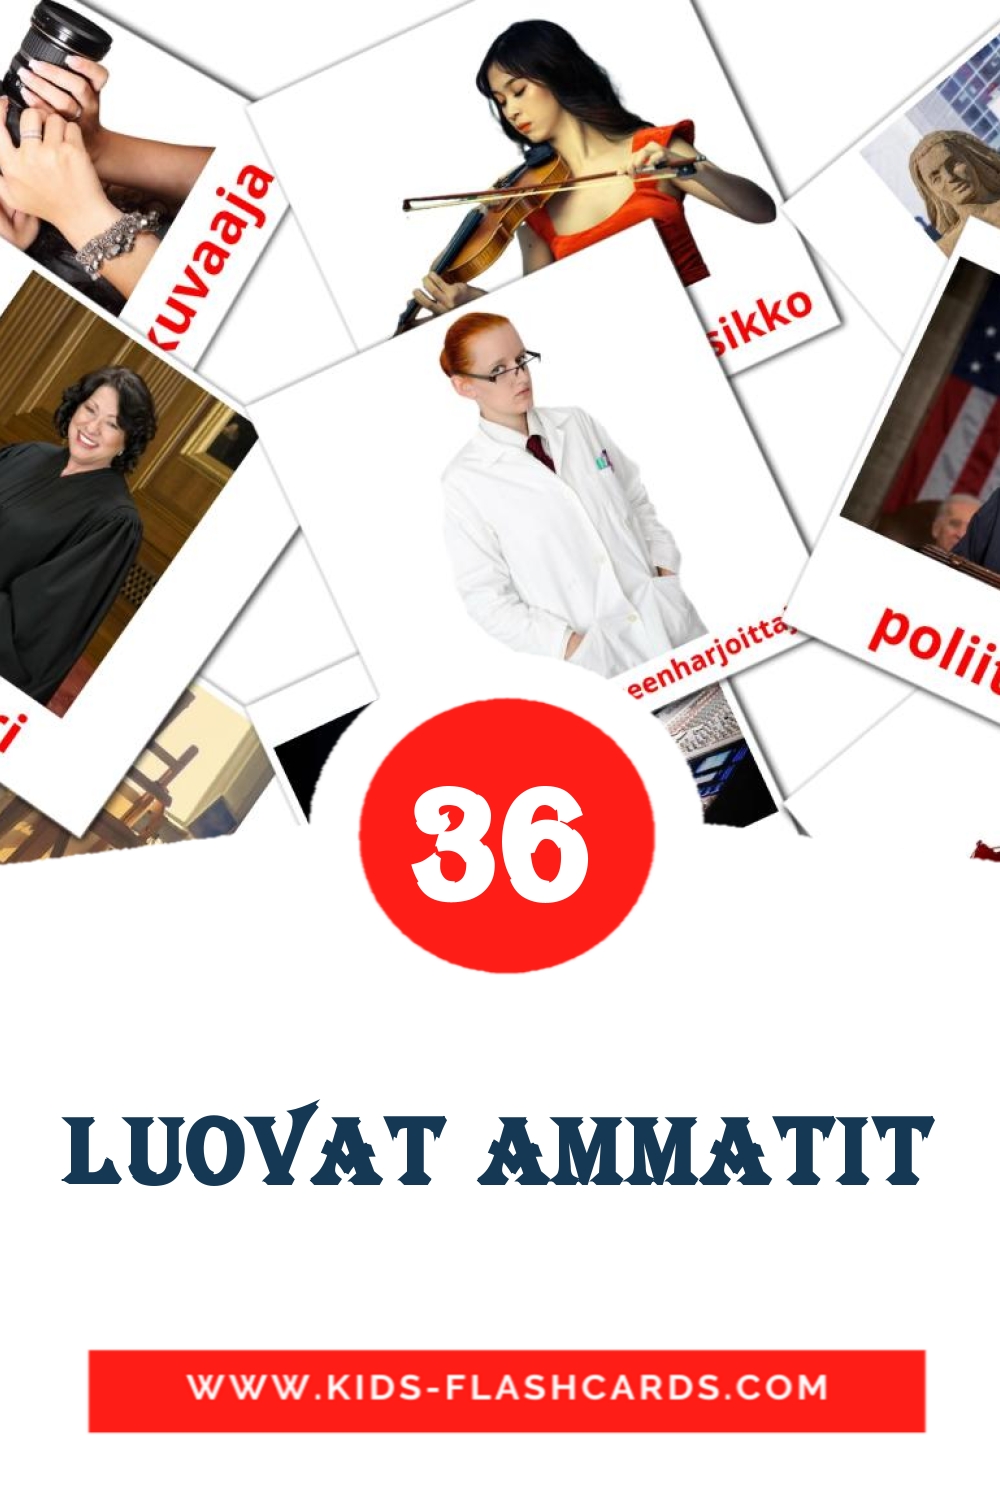 36 Cartões com Imagens de Luovat ammatit para Jardim de Infância em finlandês